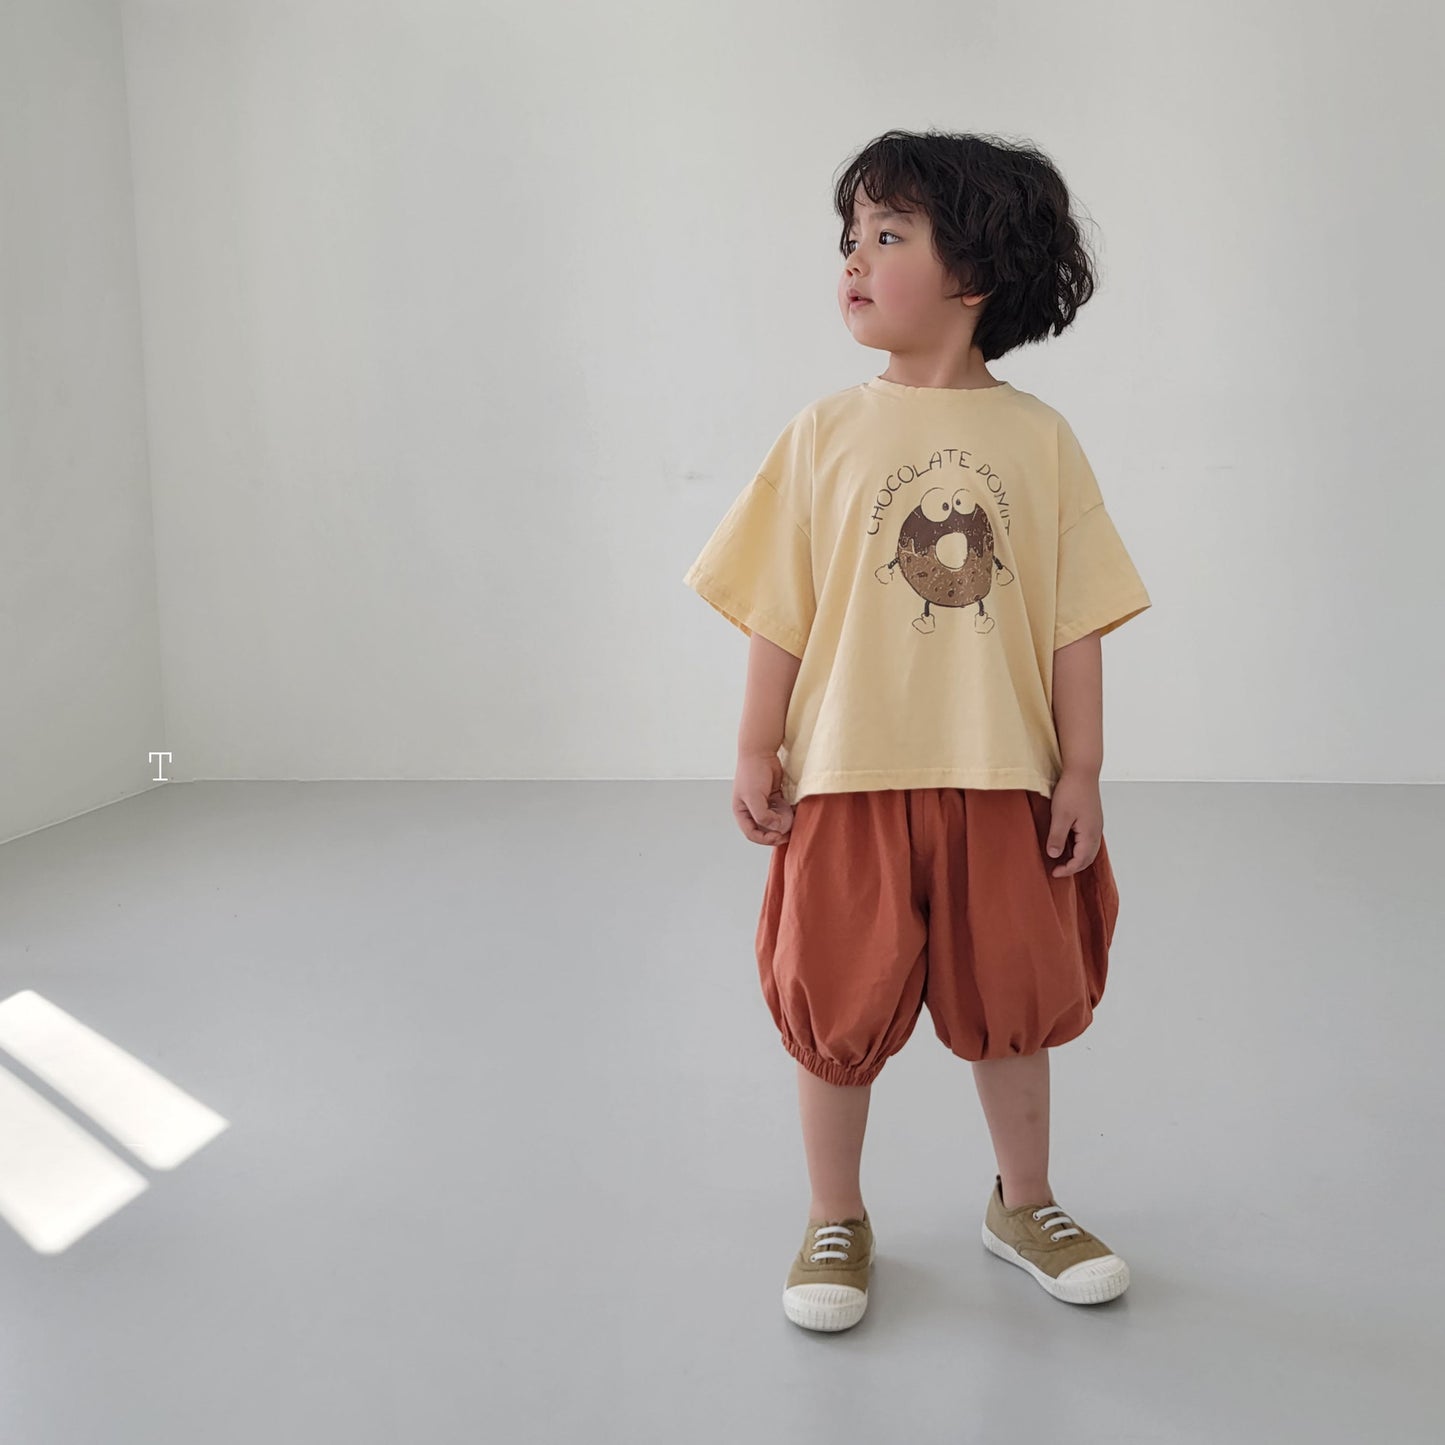 【S4042618】夏季款 兒童T恤 可愛卡通短袖寶寶純棉休閒上衣-2色